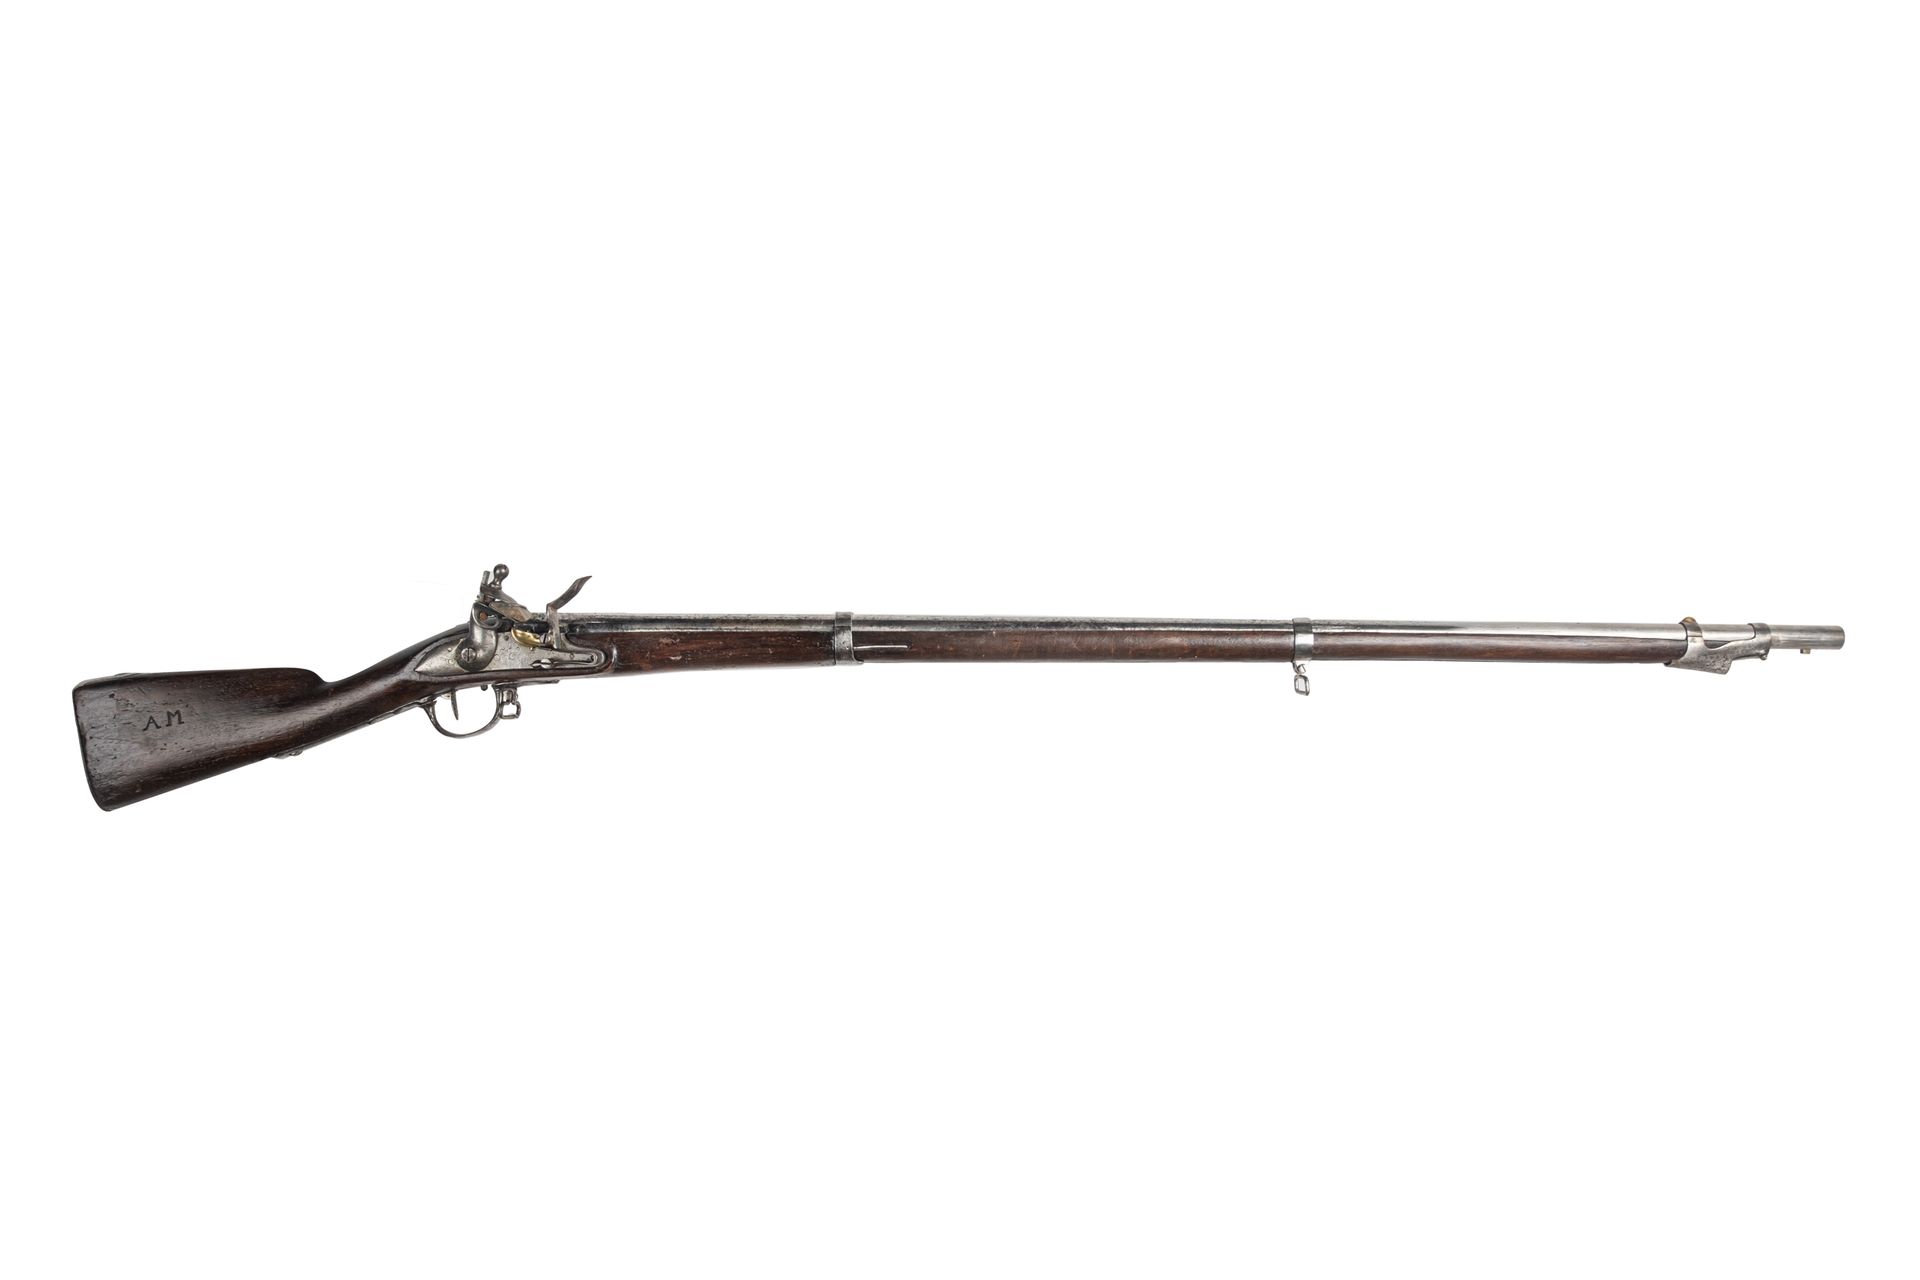 Null 1777型燧发枪步兵步枪。

圆形枪管，带冲压的雷电。刻有 "圣艾蒂安 "字样的锁和圆身的锤子。螺丝口和铁质配件，有的已打孔。

胡桃木枪托，带枪托，&hellip;